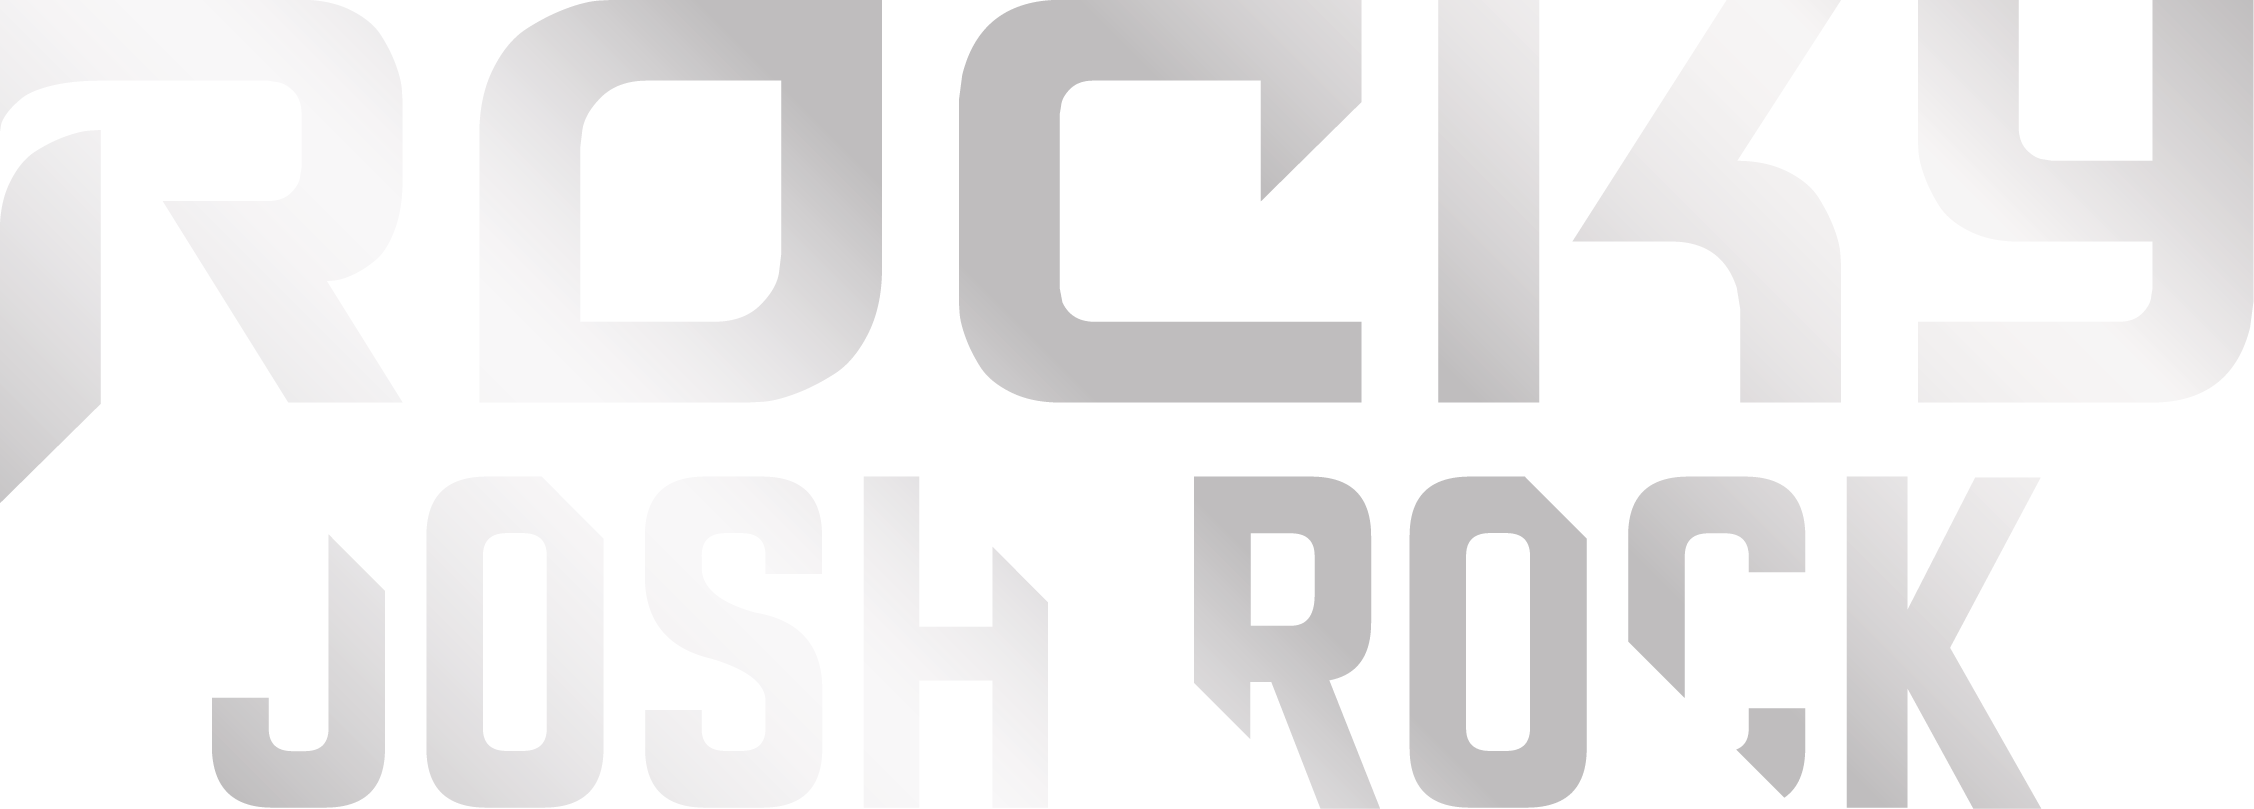 Josh Rock Darts